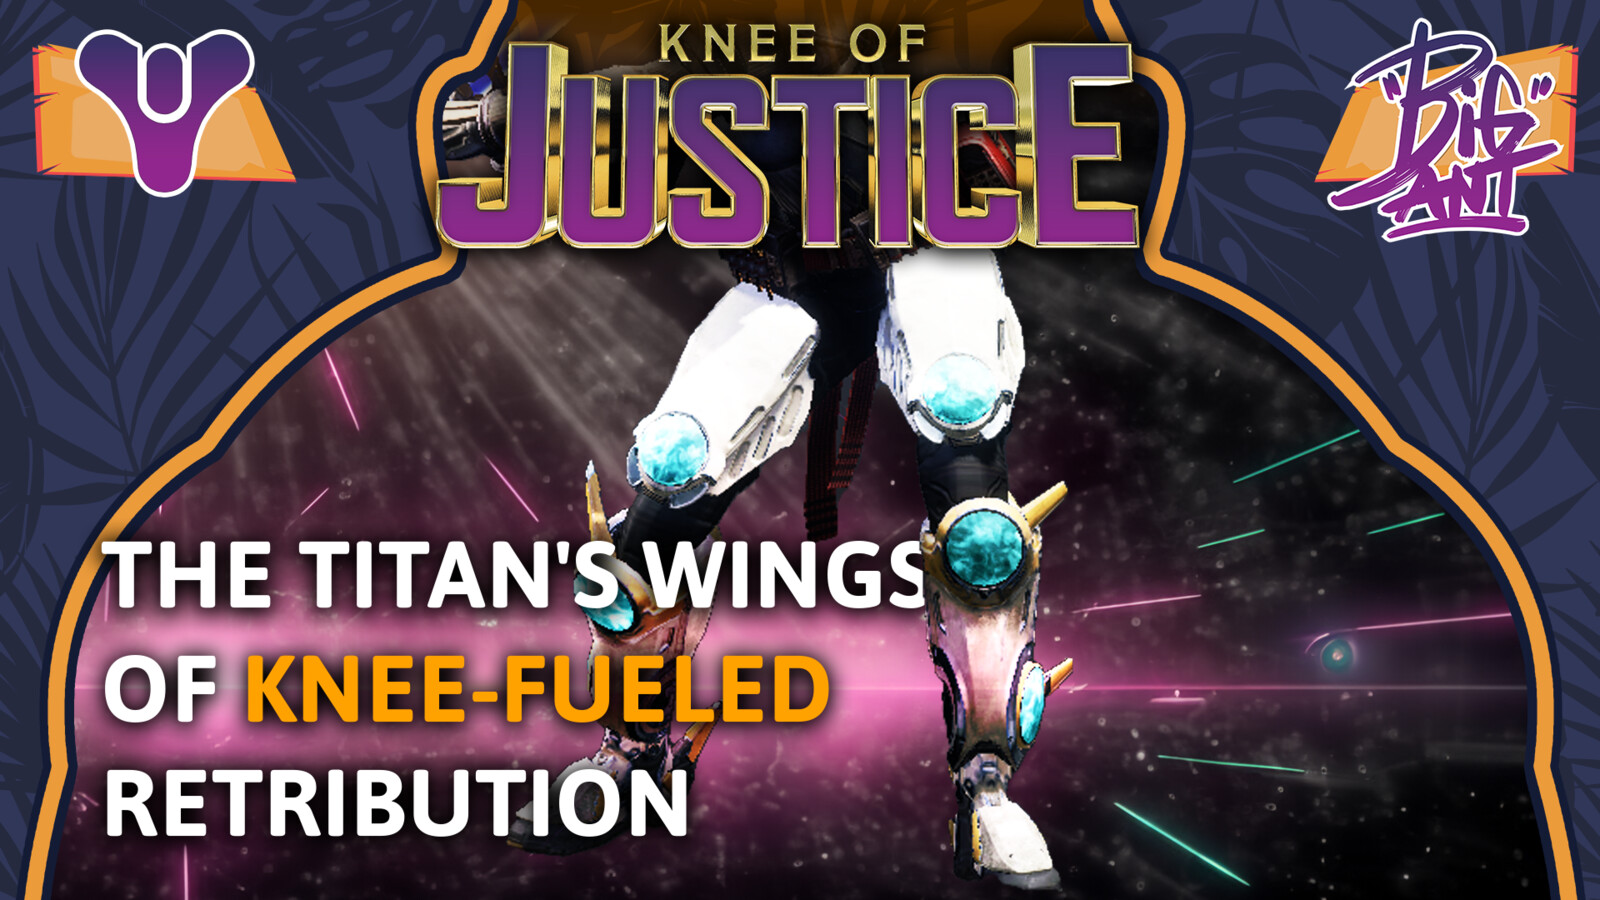 Destiny - Knee Of Justice #2
for BigAnt (https://twitter.com/Bigantsgaming)